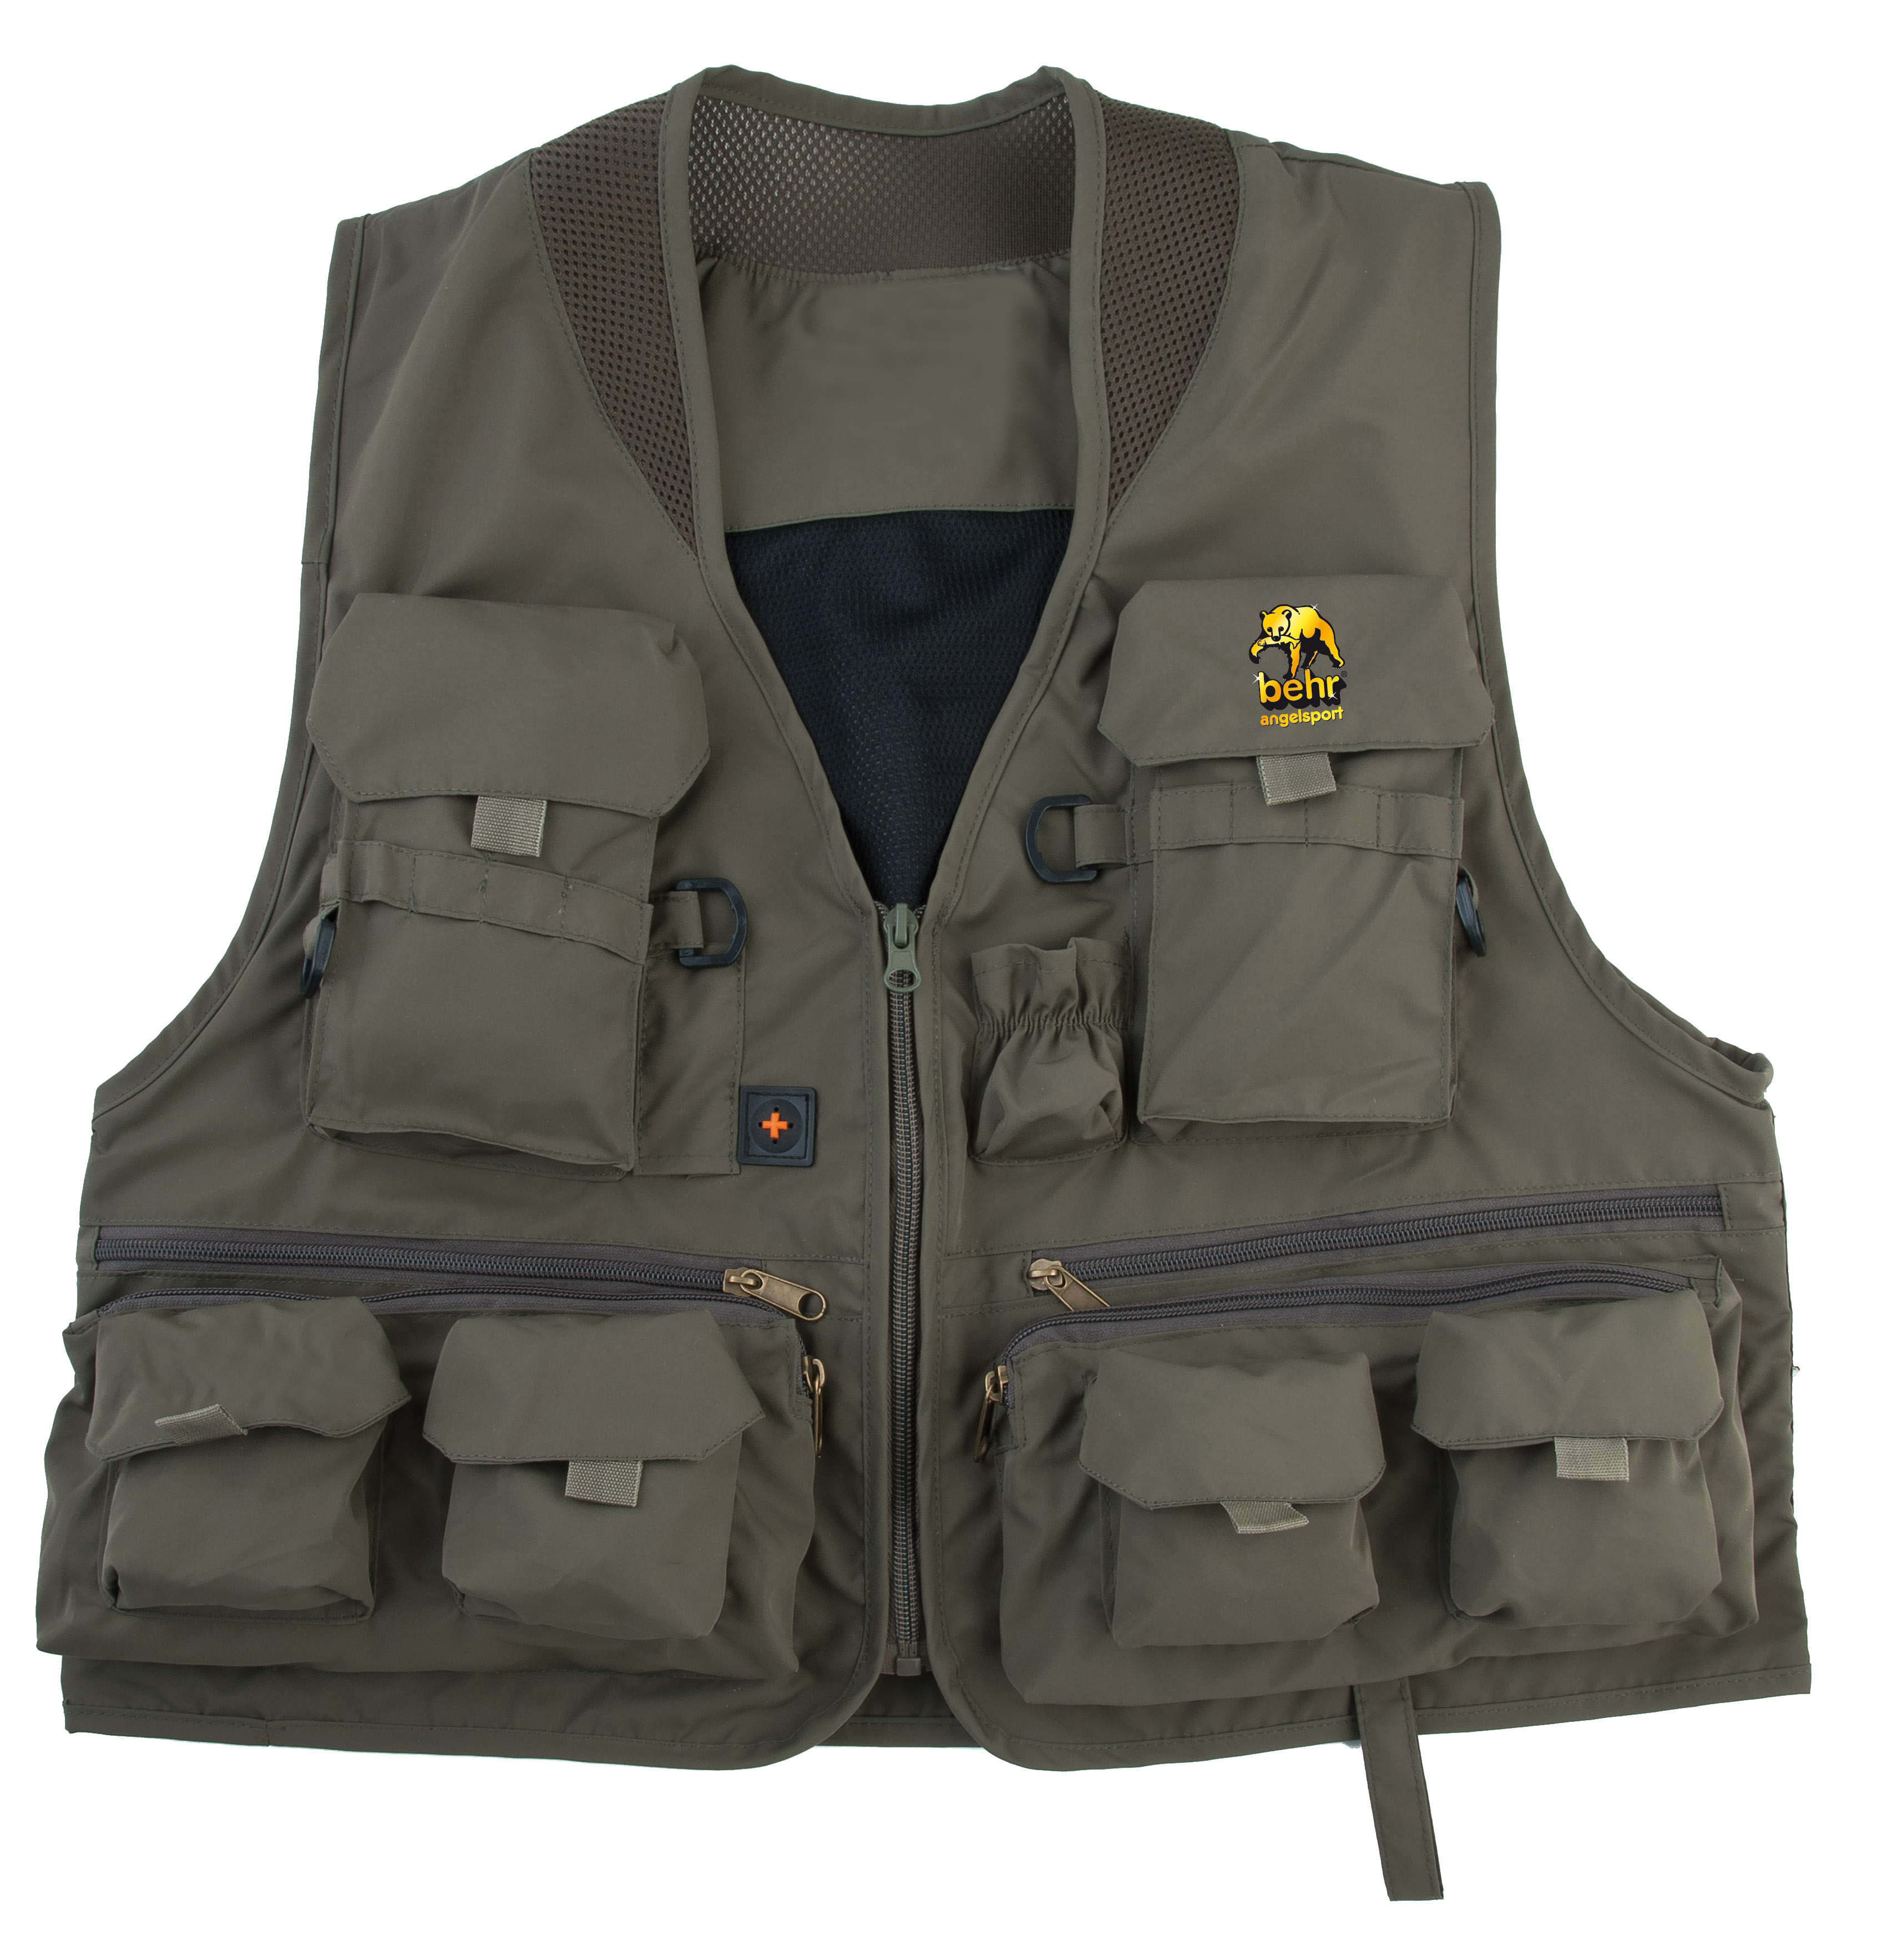 Behr Taslon fishing vest size XXL